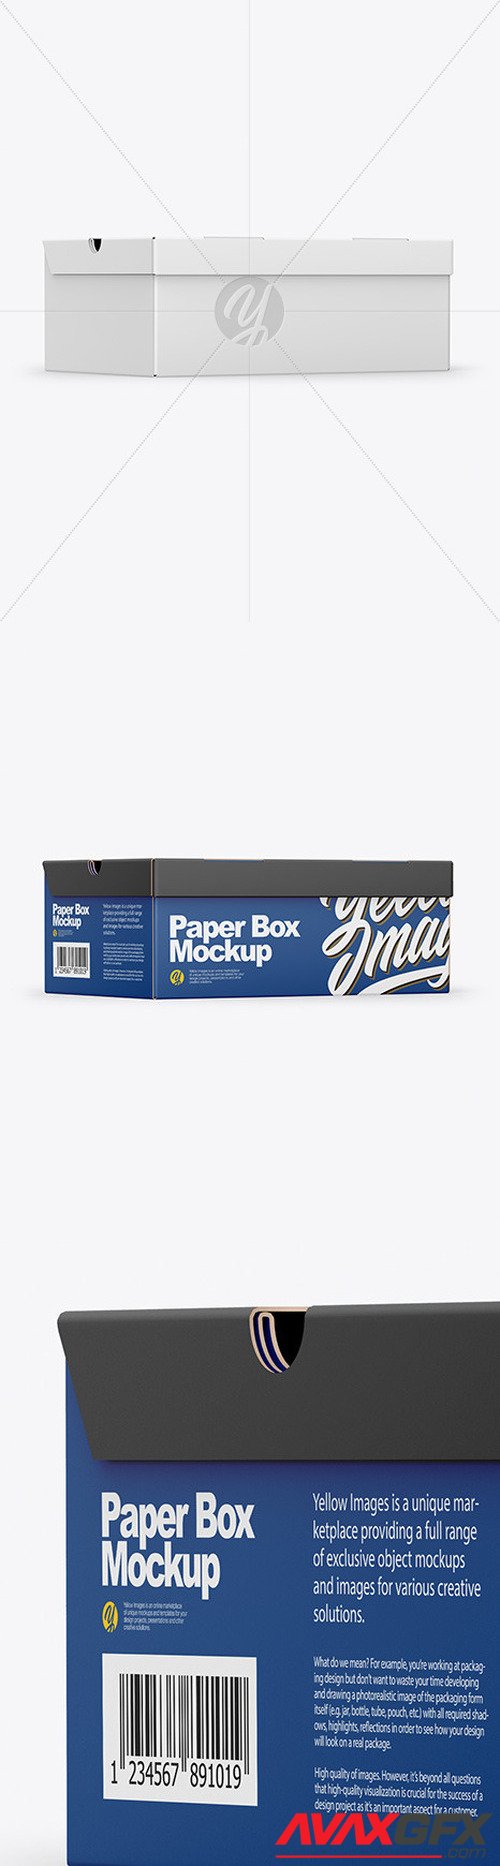 Paper Box Mockup 45960 TIF